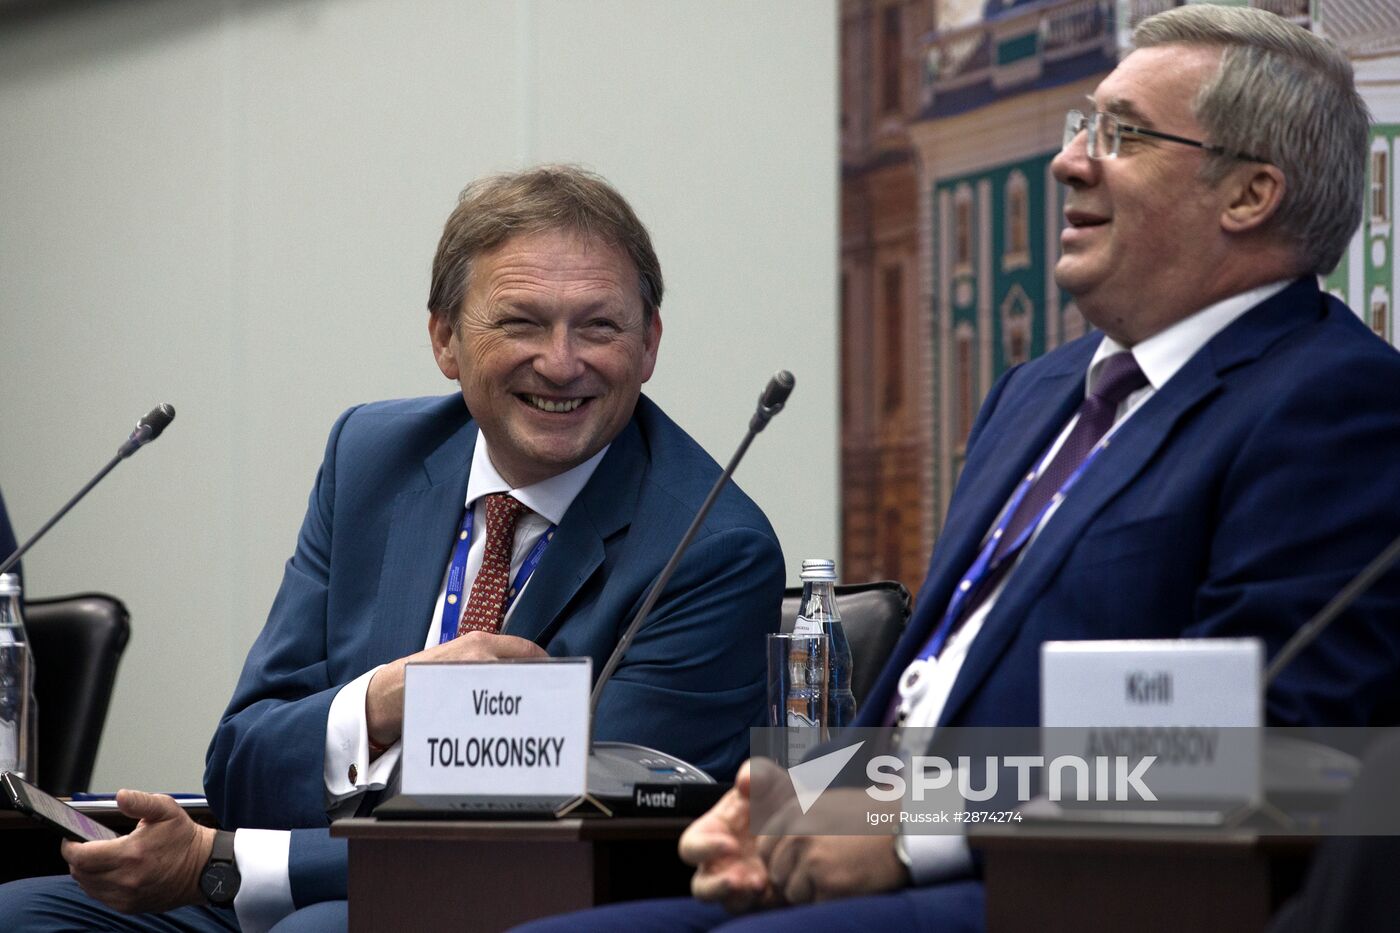 The Russian Economic Growth Agenda panel session